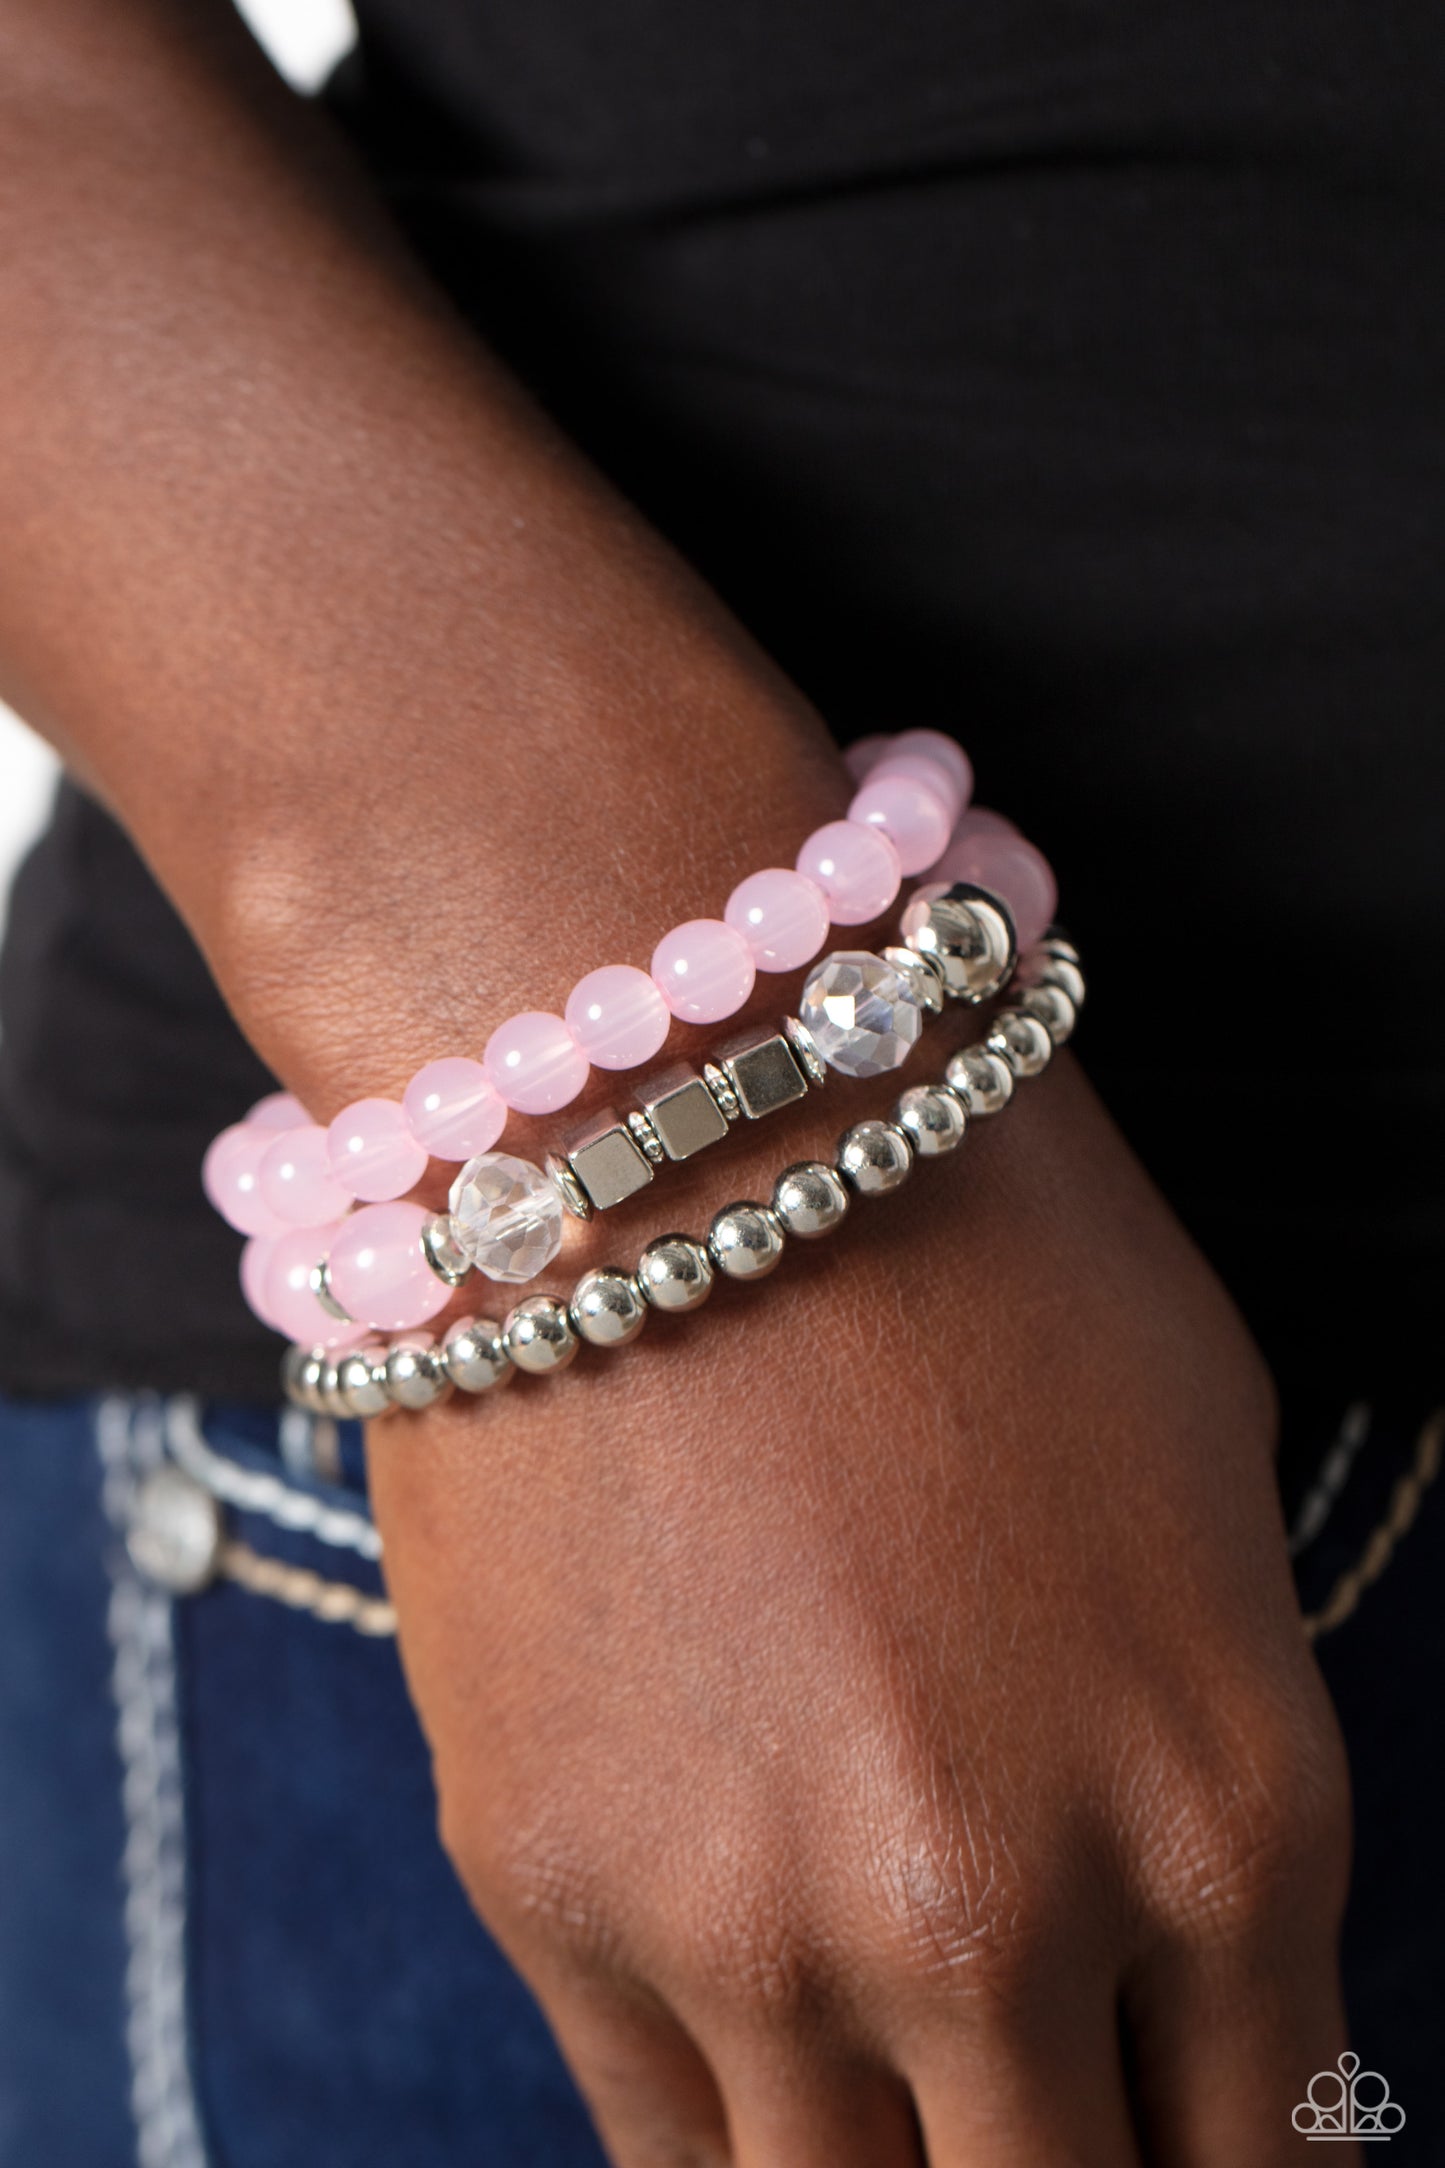 CUBE Your Enthusiasm - Pink Bracelet